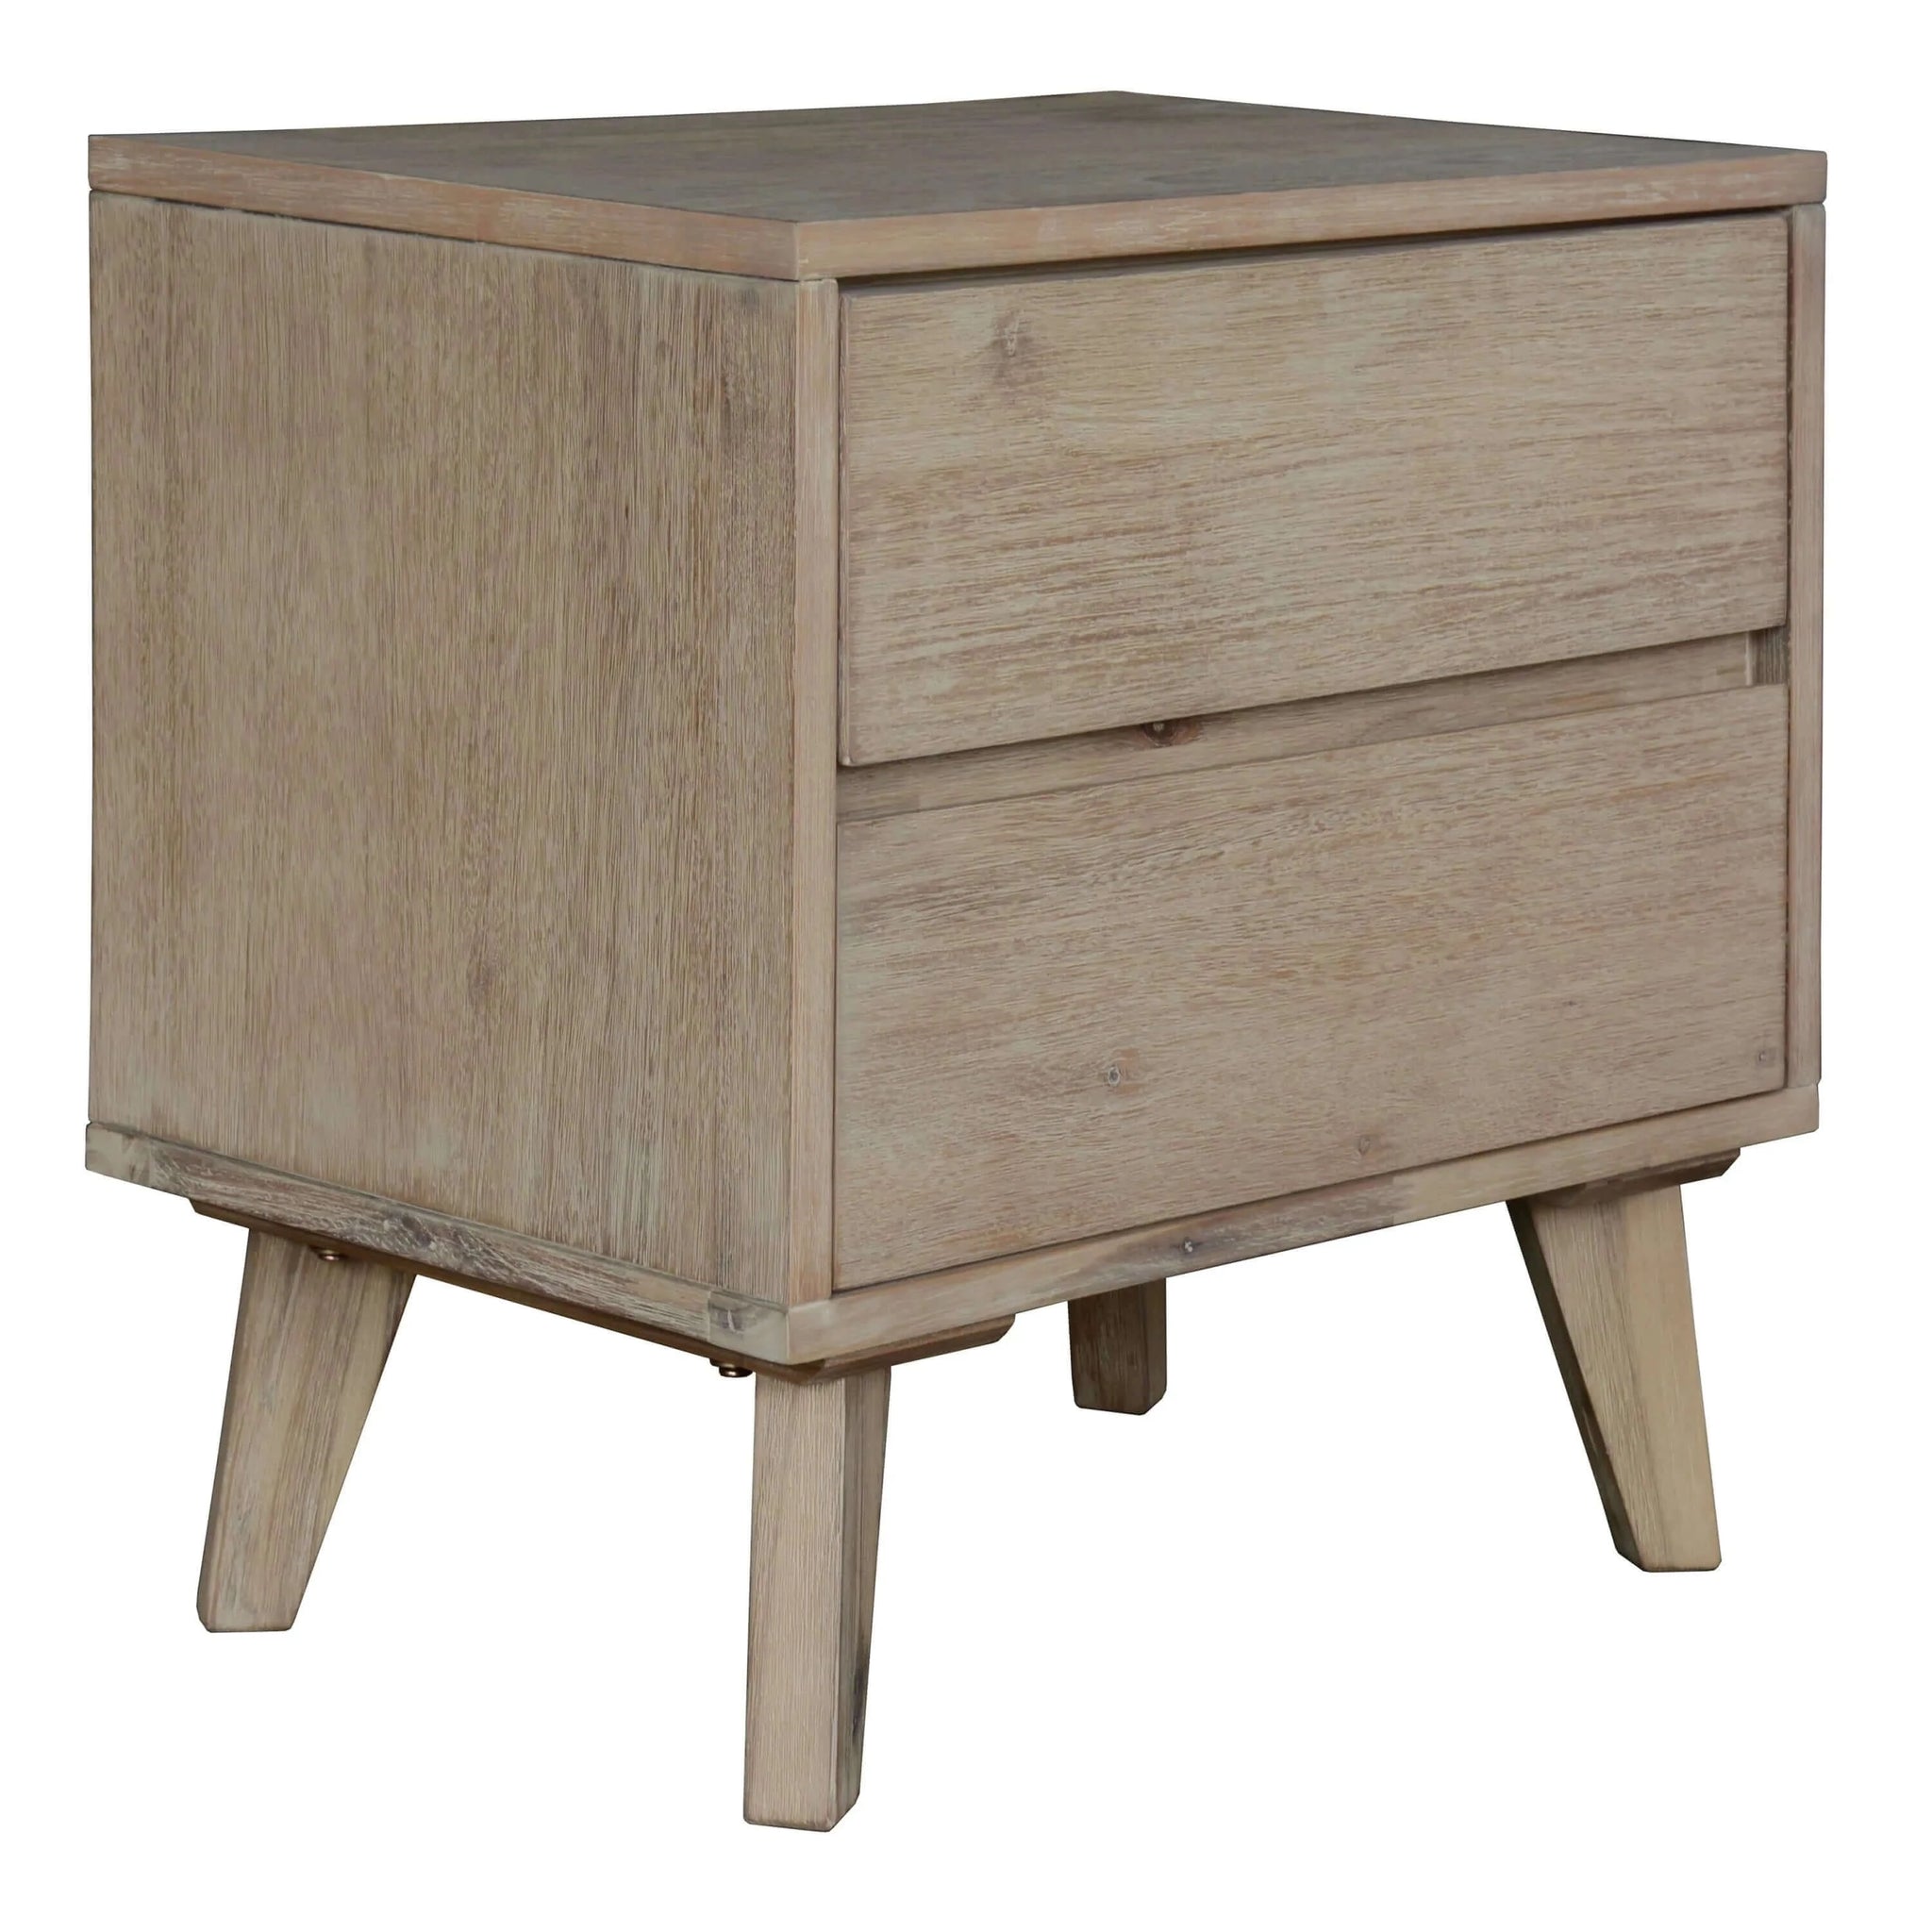 Buy abelia bedside nightstand 2 drawers storage cabinet shelf side end table - brushed smoke - upinteriors-Upinteriors